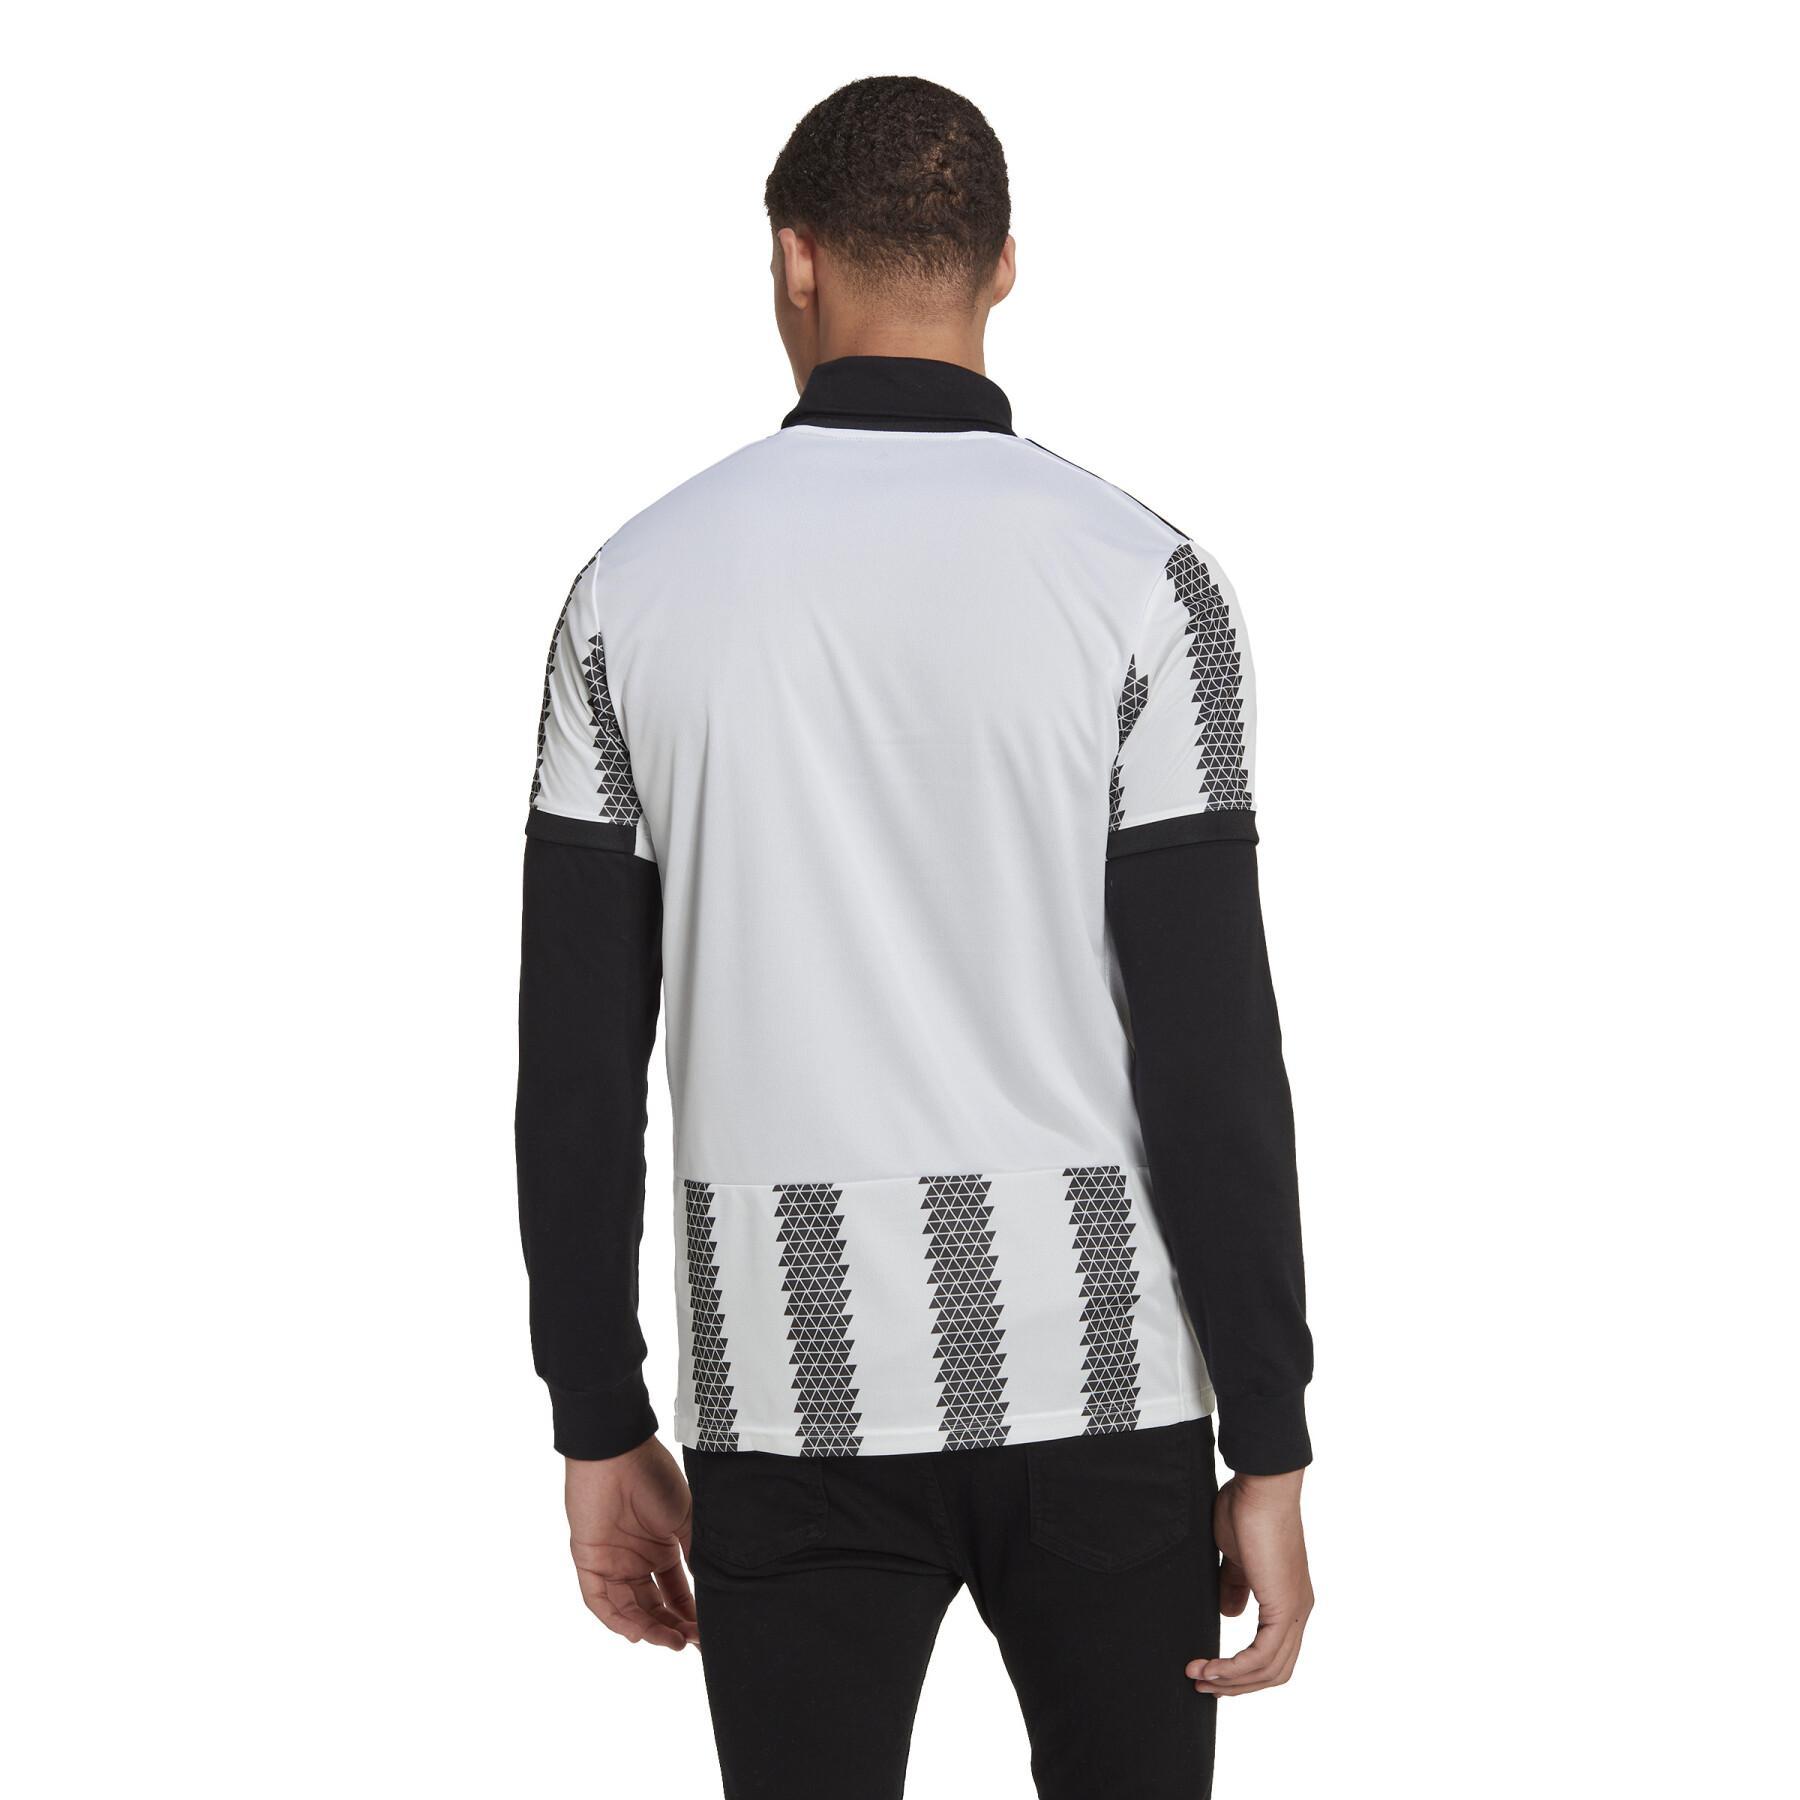 Camiseta primera equipación Juventus Turin 2022/23